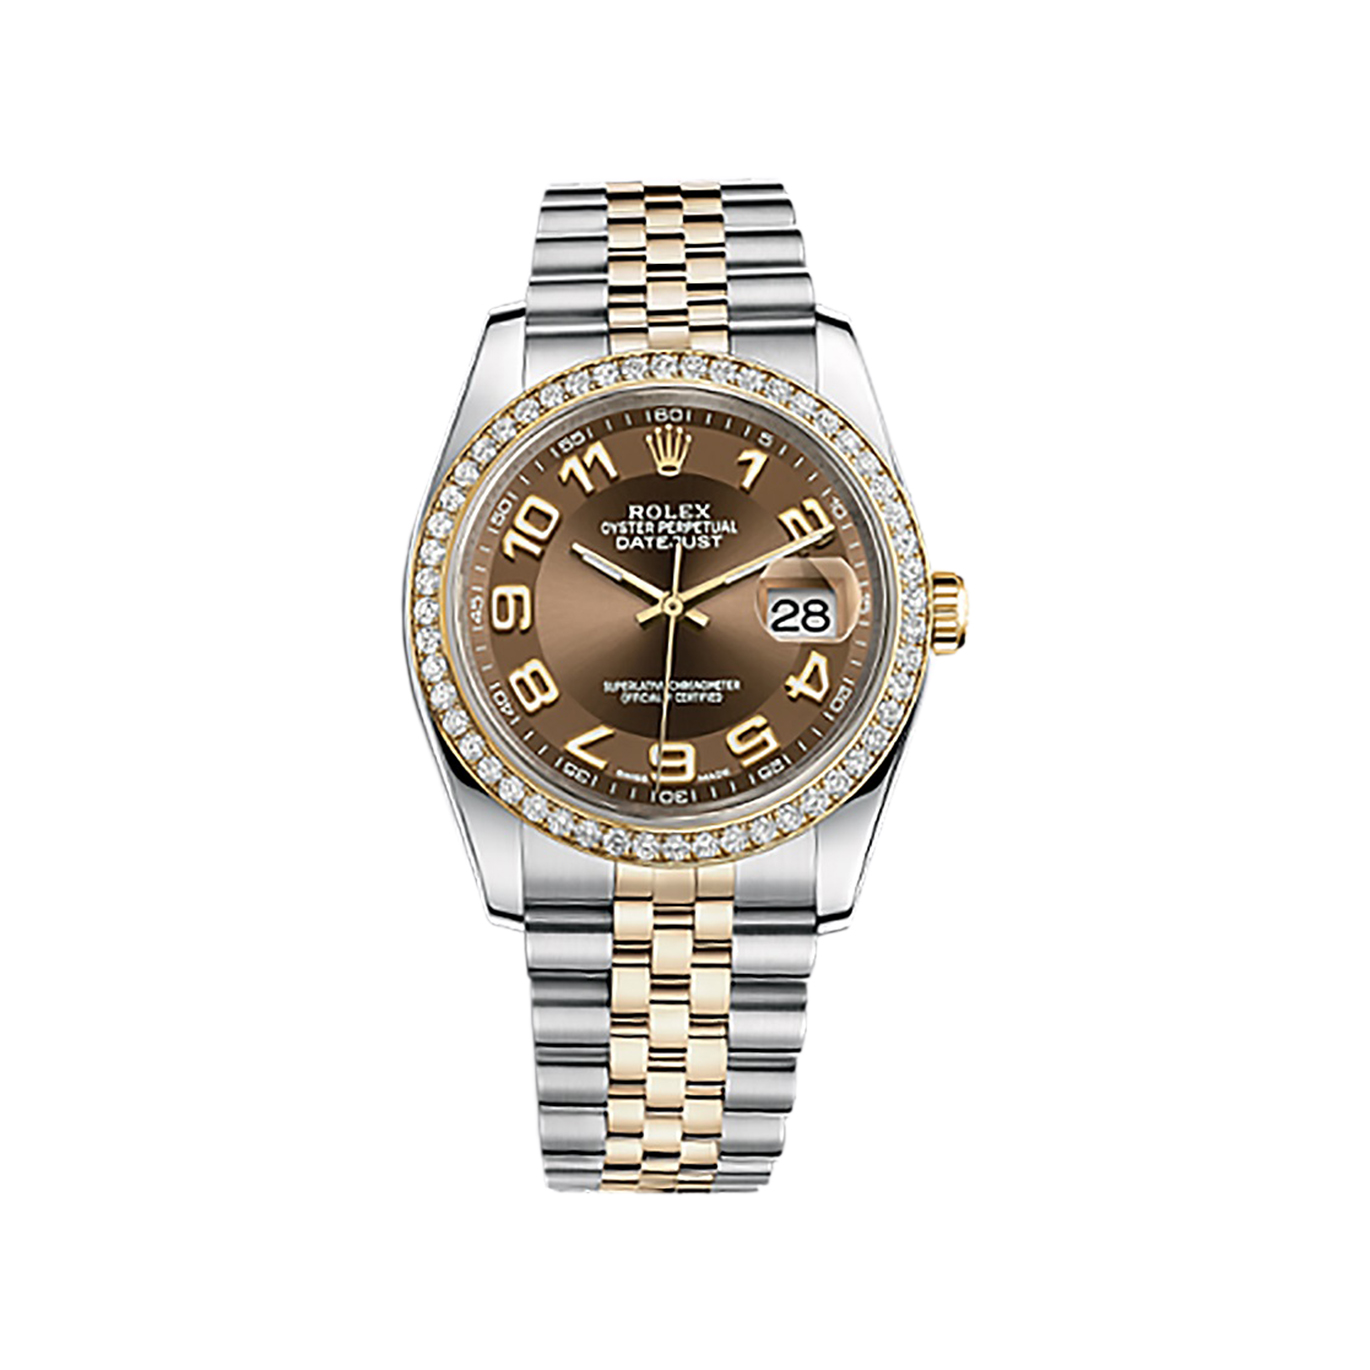 Datejust 36 116243 Gold & Stainless Steel Watch (Bronze)